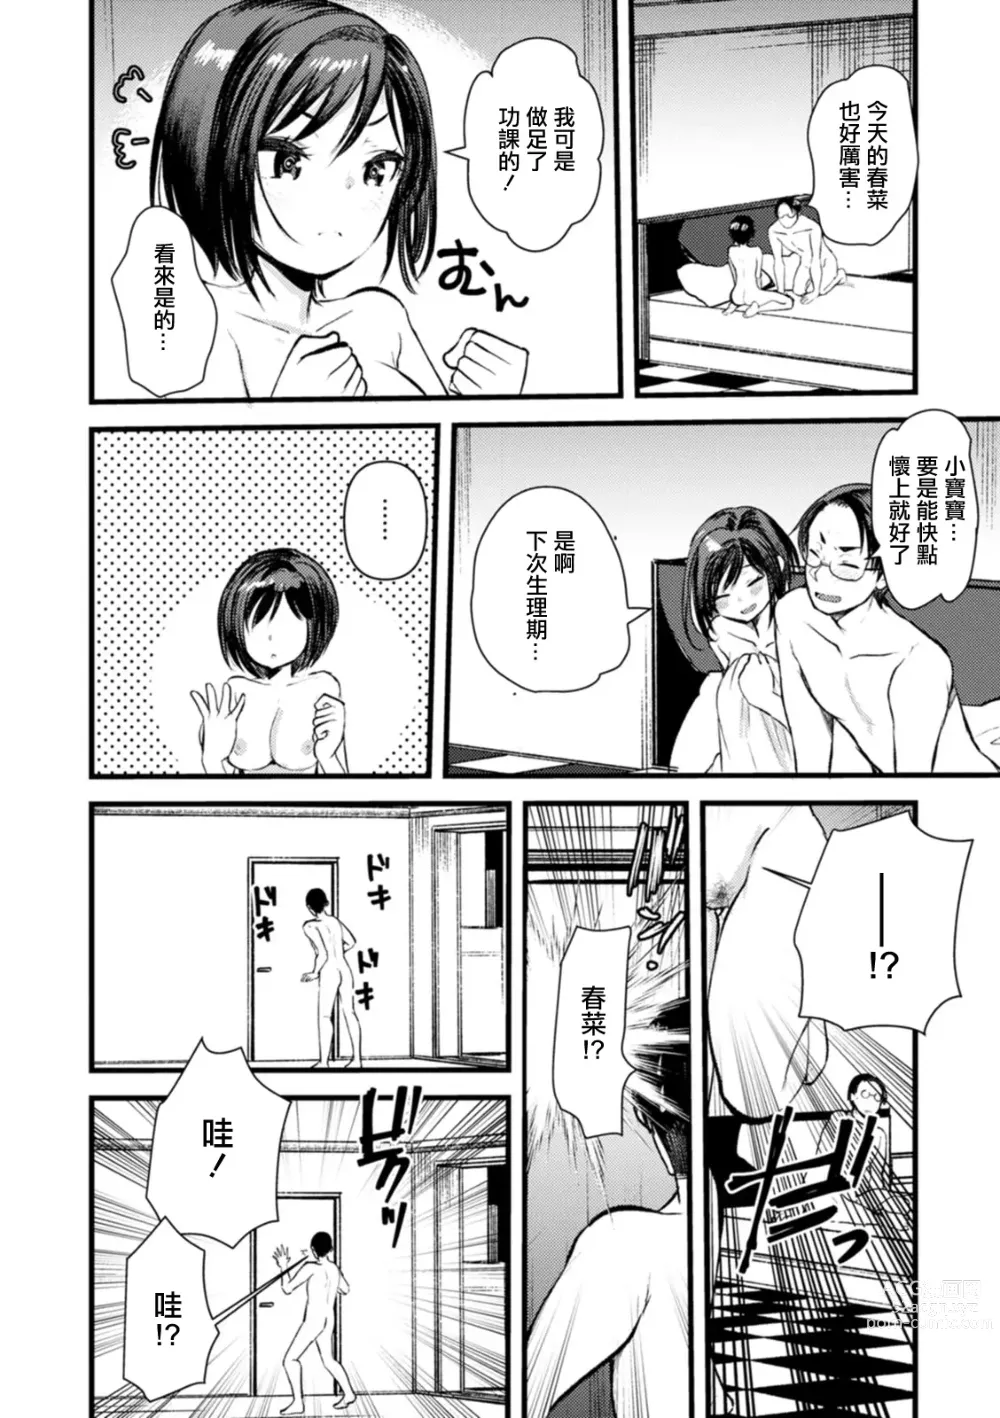 Page 18 of manga Kojirase Ero Nikki Vol.10